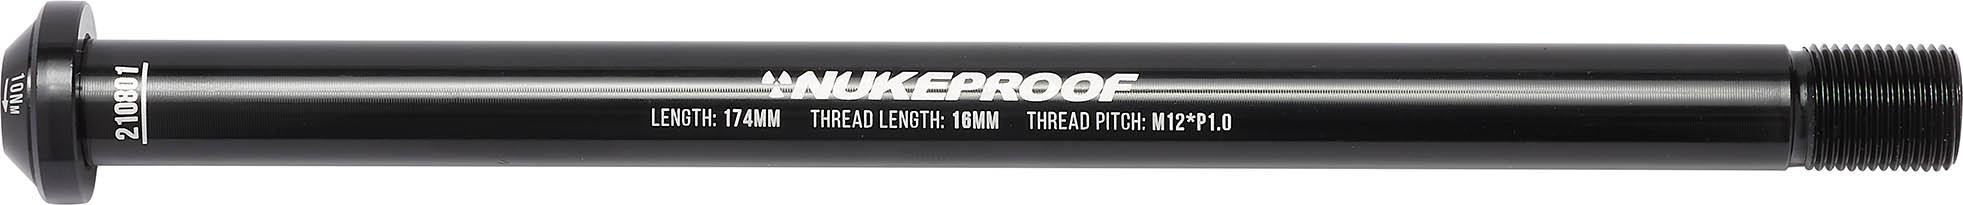 Nukeproof Thru Axle Rear 12mm - Black